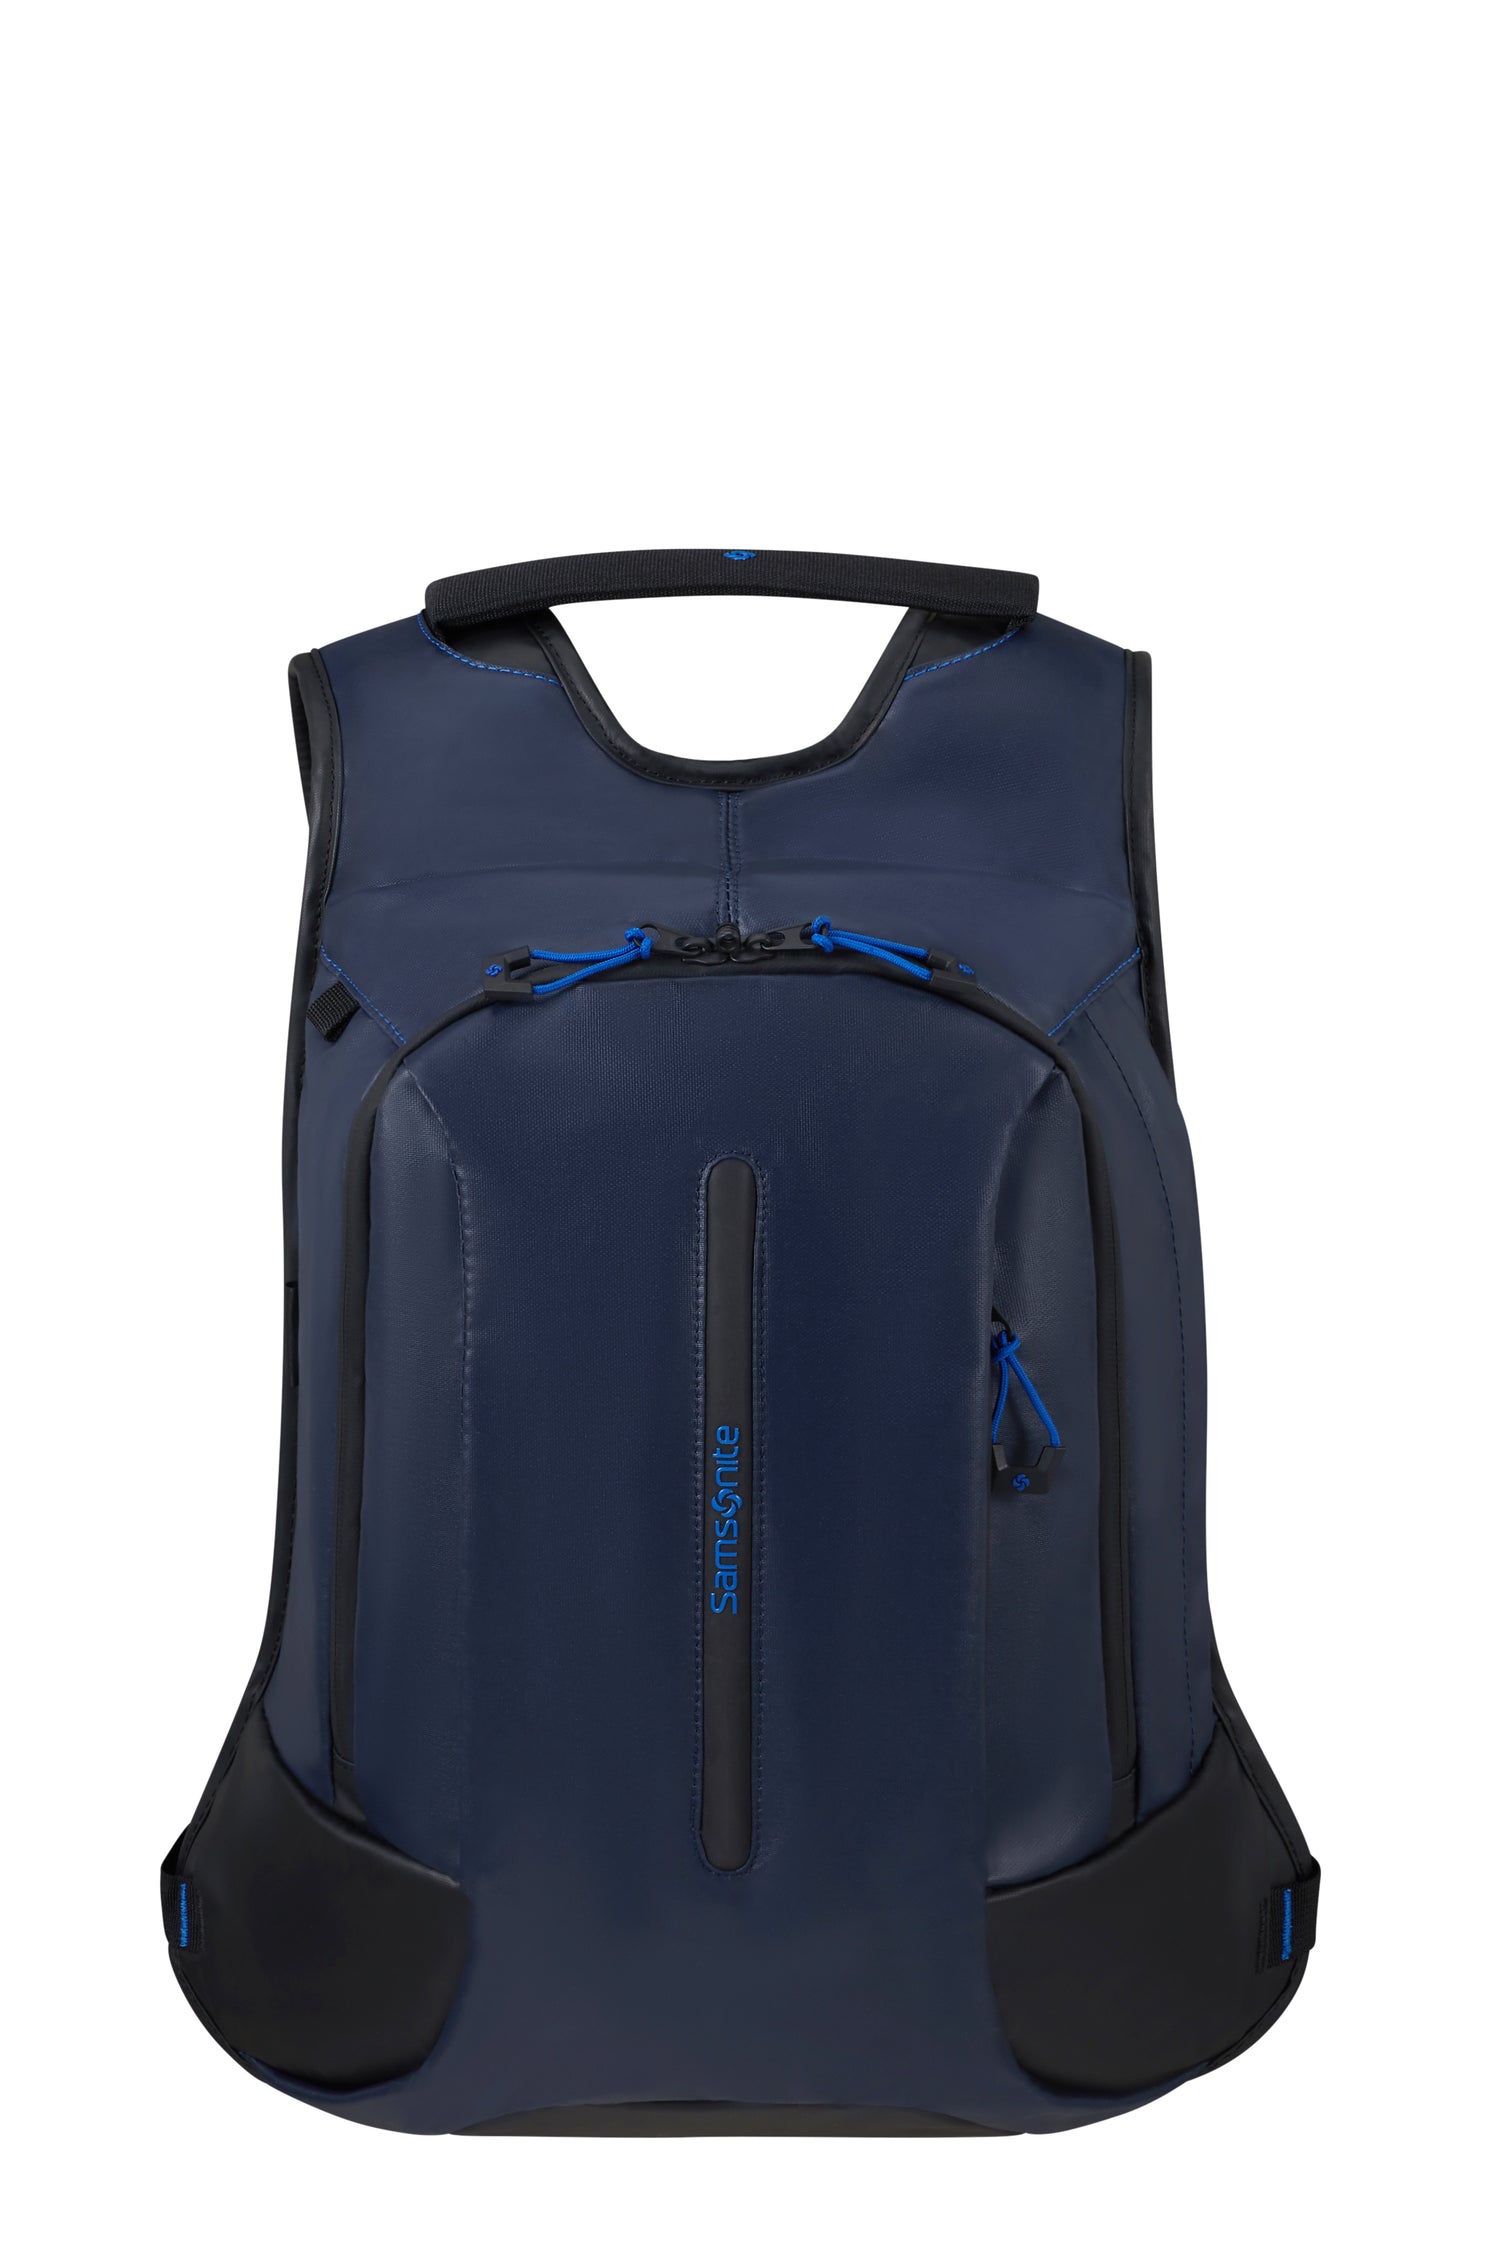 Samsonite Ecodiver Small Laptop Backpack 14”